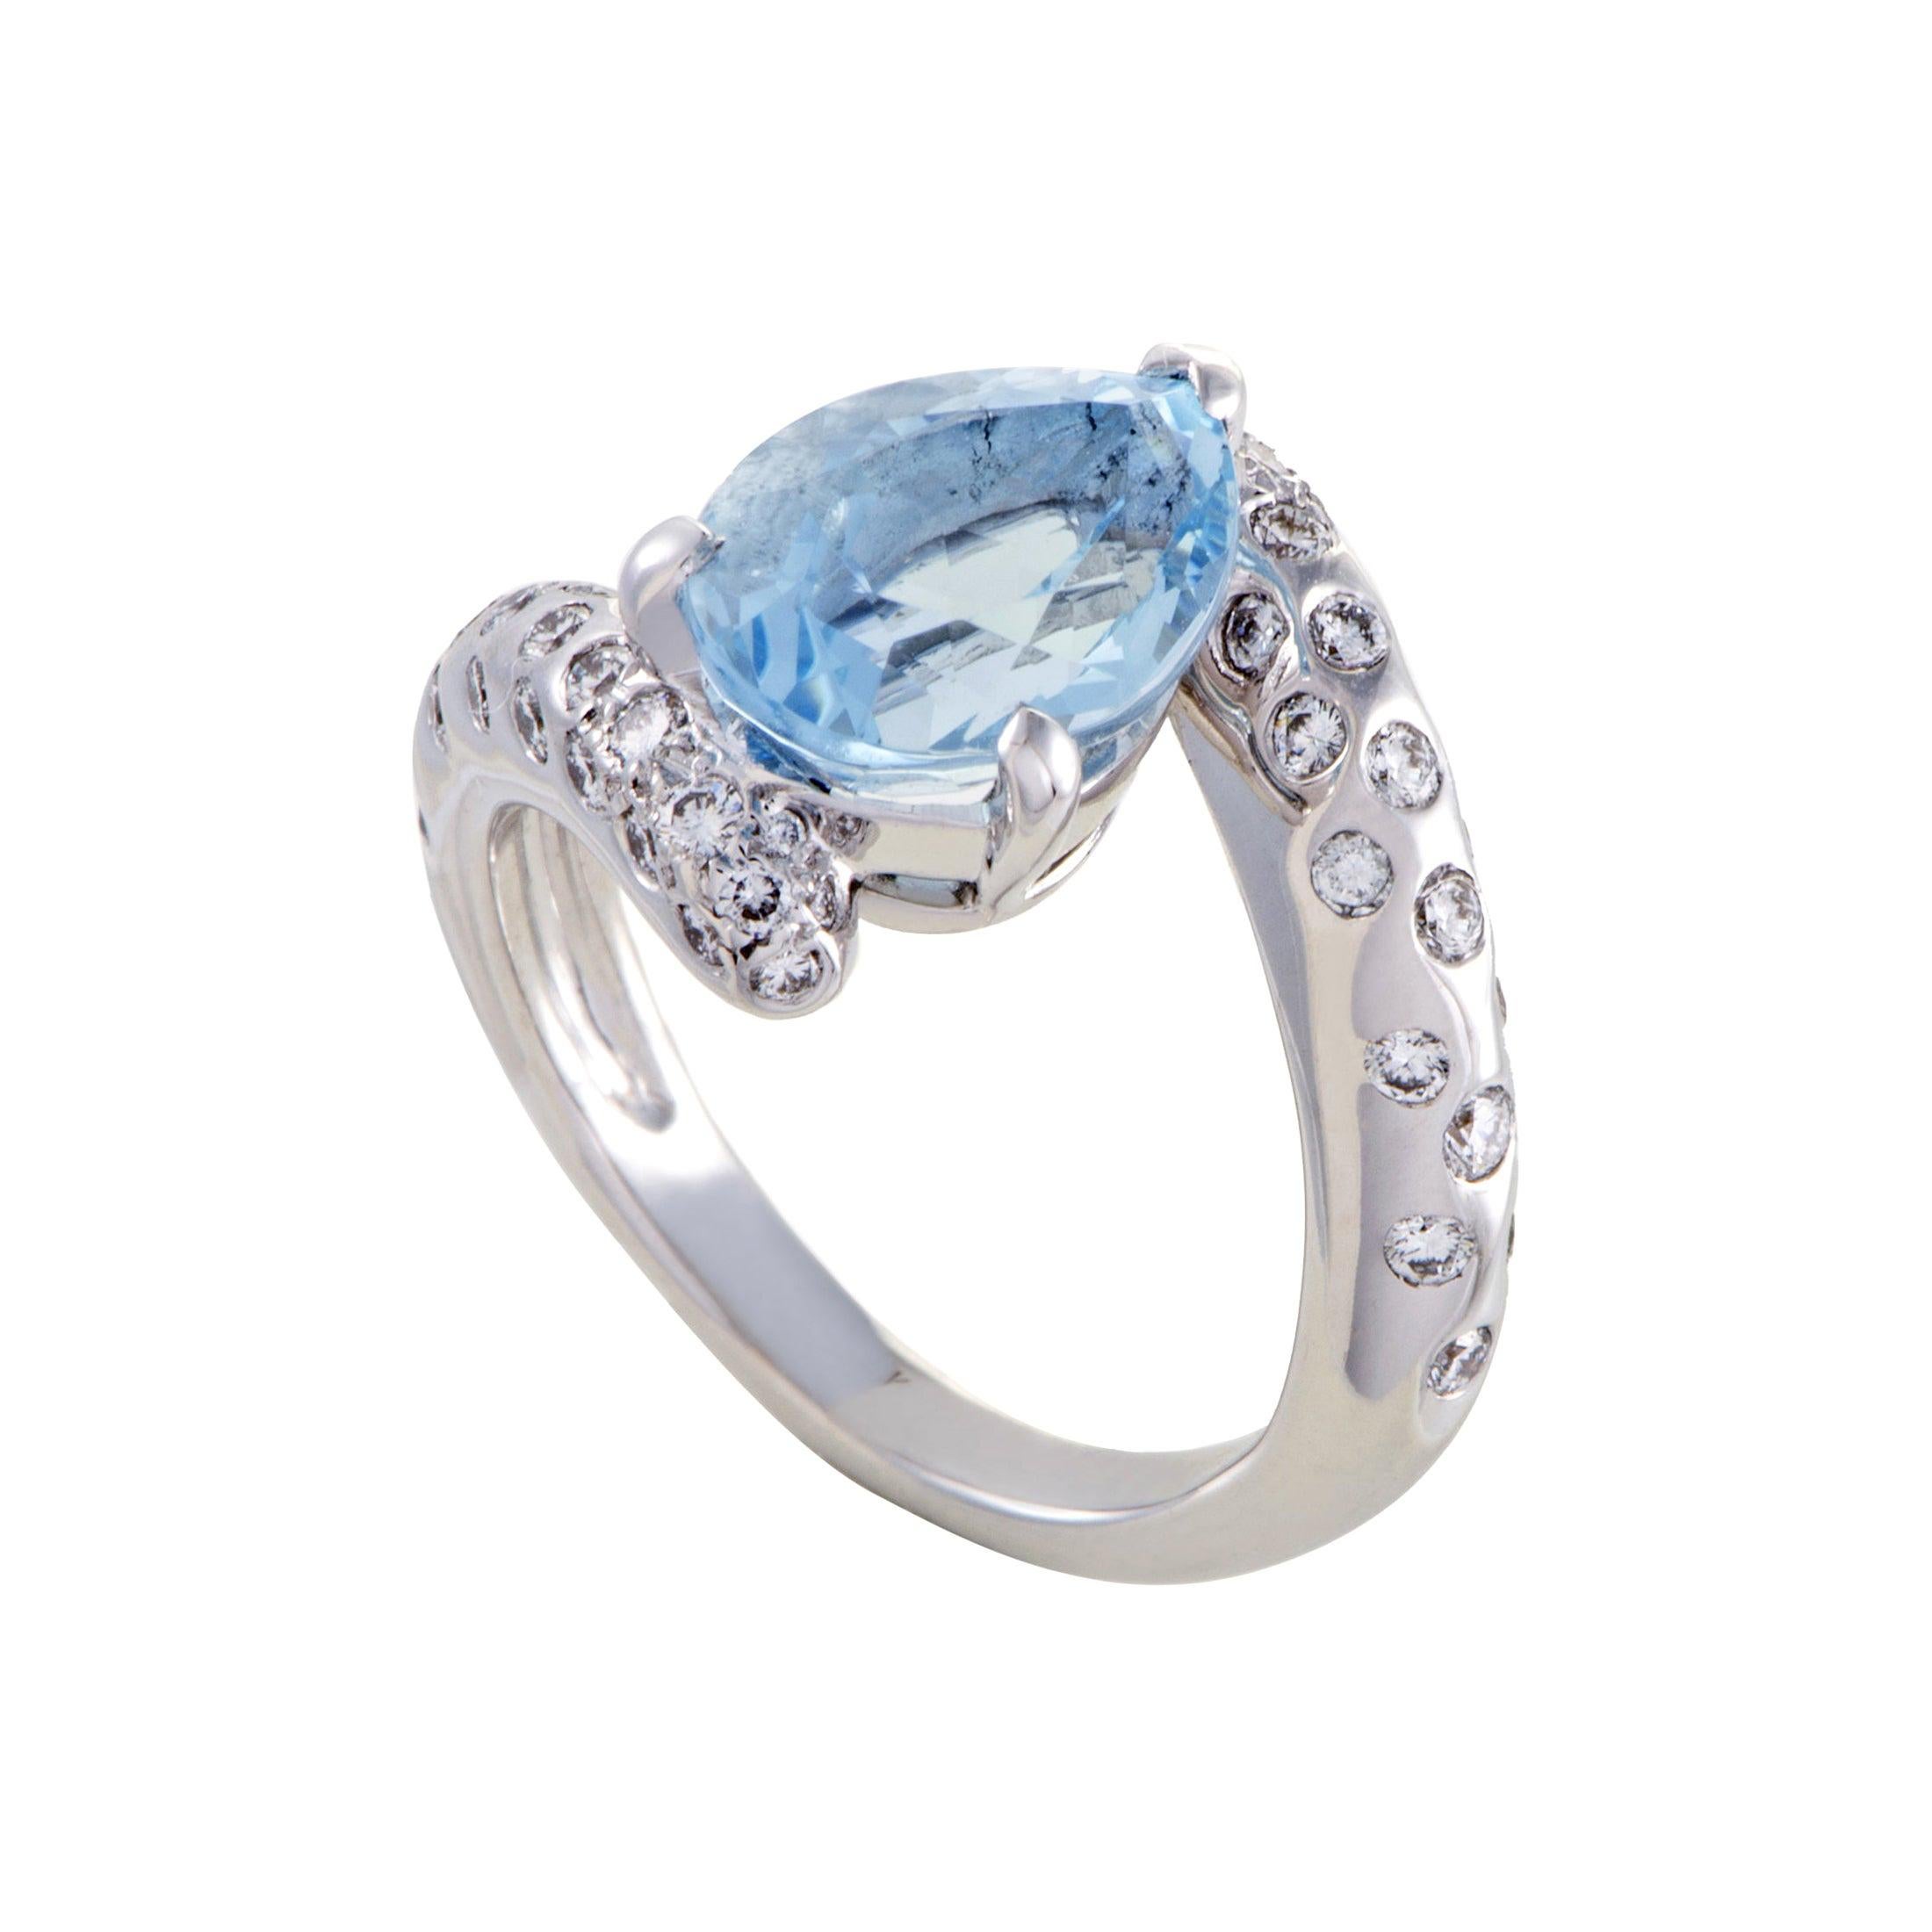 Chanel 18 Karat White Gold Diamond and Aquamarine Ring